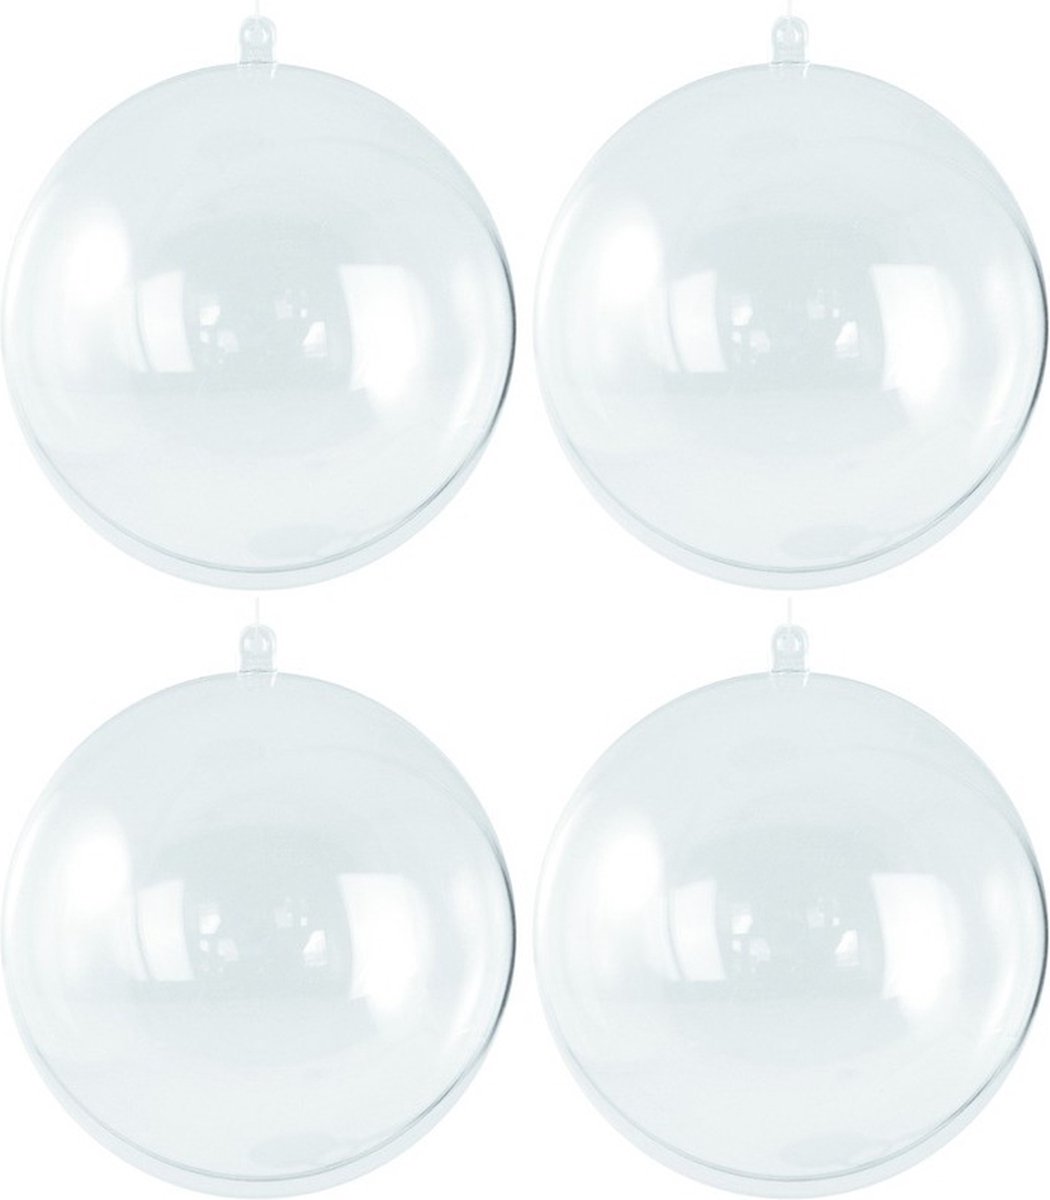 20x Transparante hobby/DIY kerstballen 10 cm - Knutselen - Kerstballen maken hobby materiaal/basis materialen